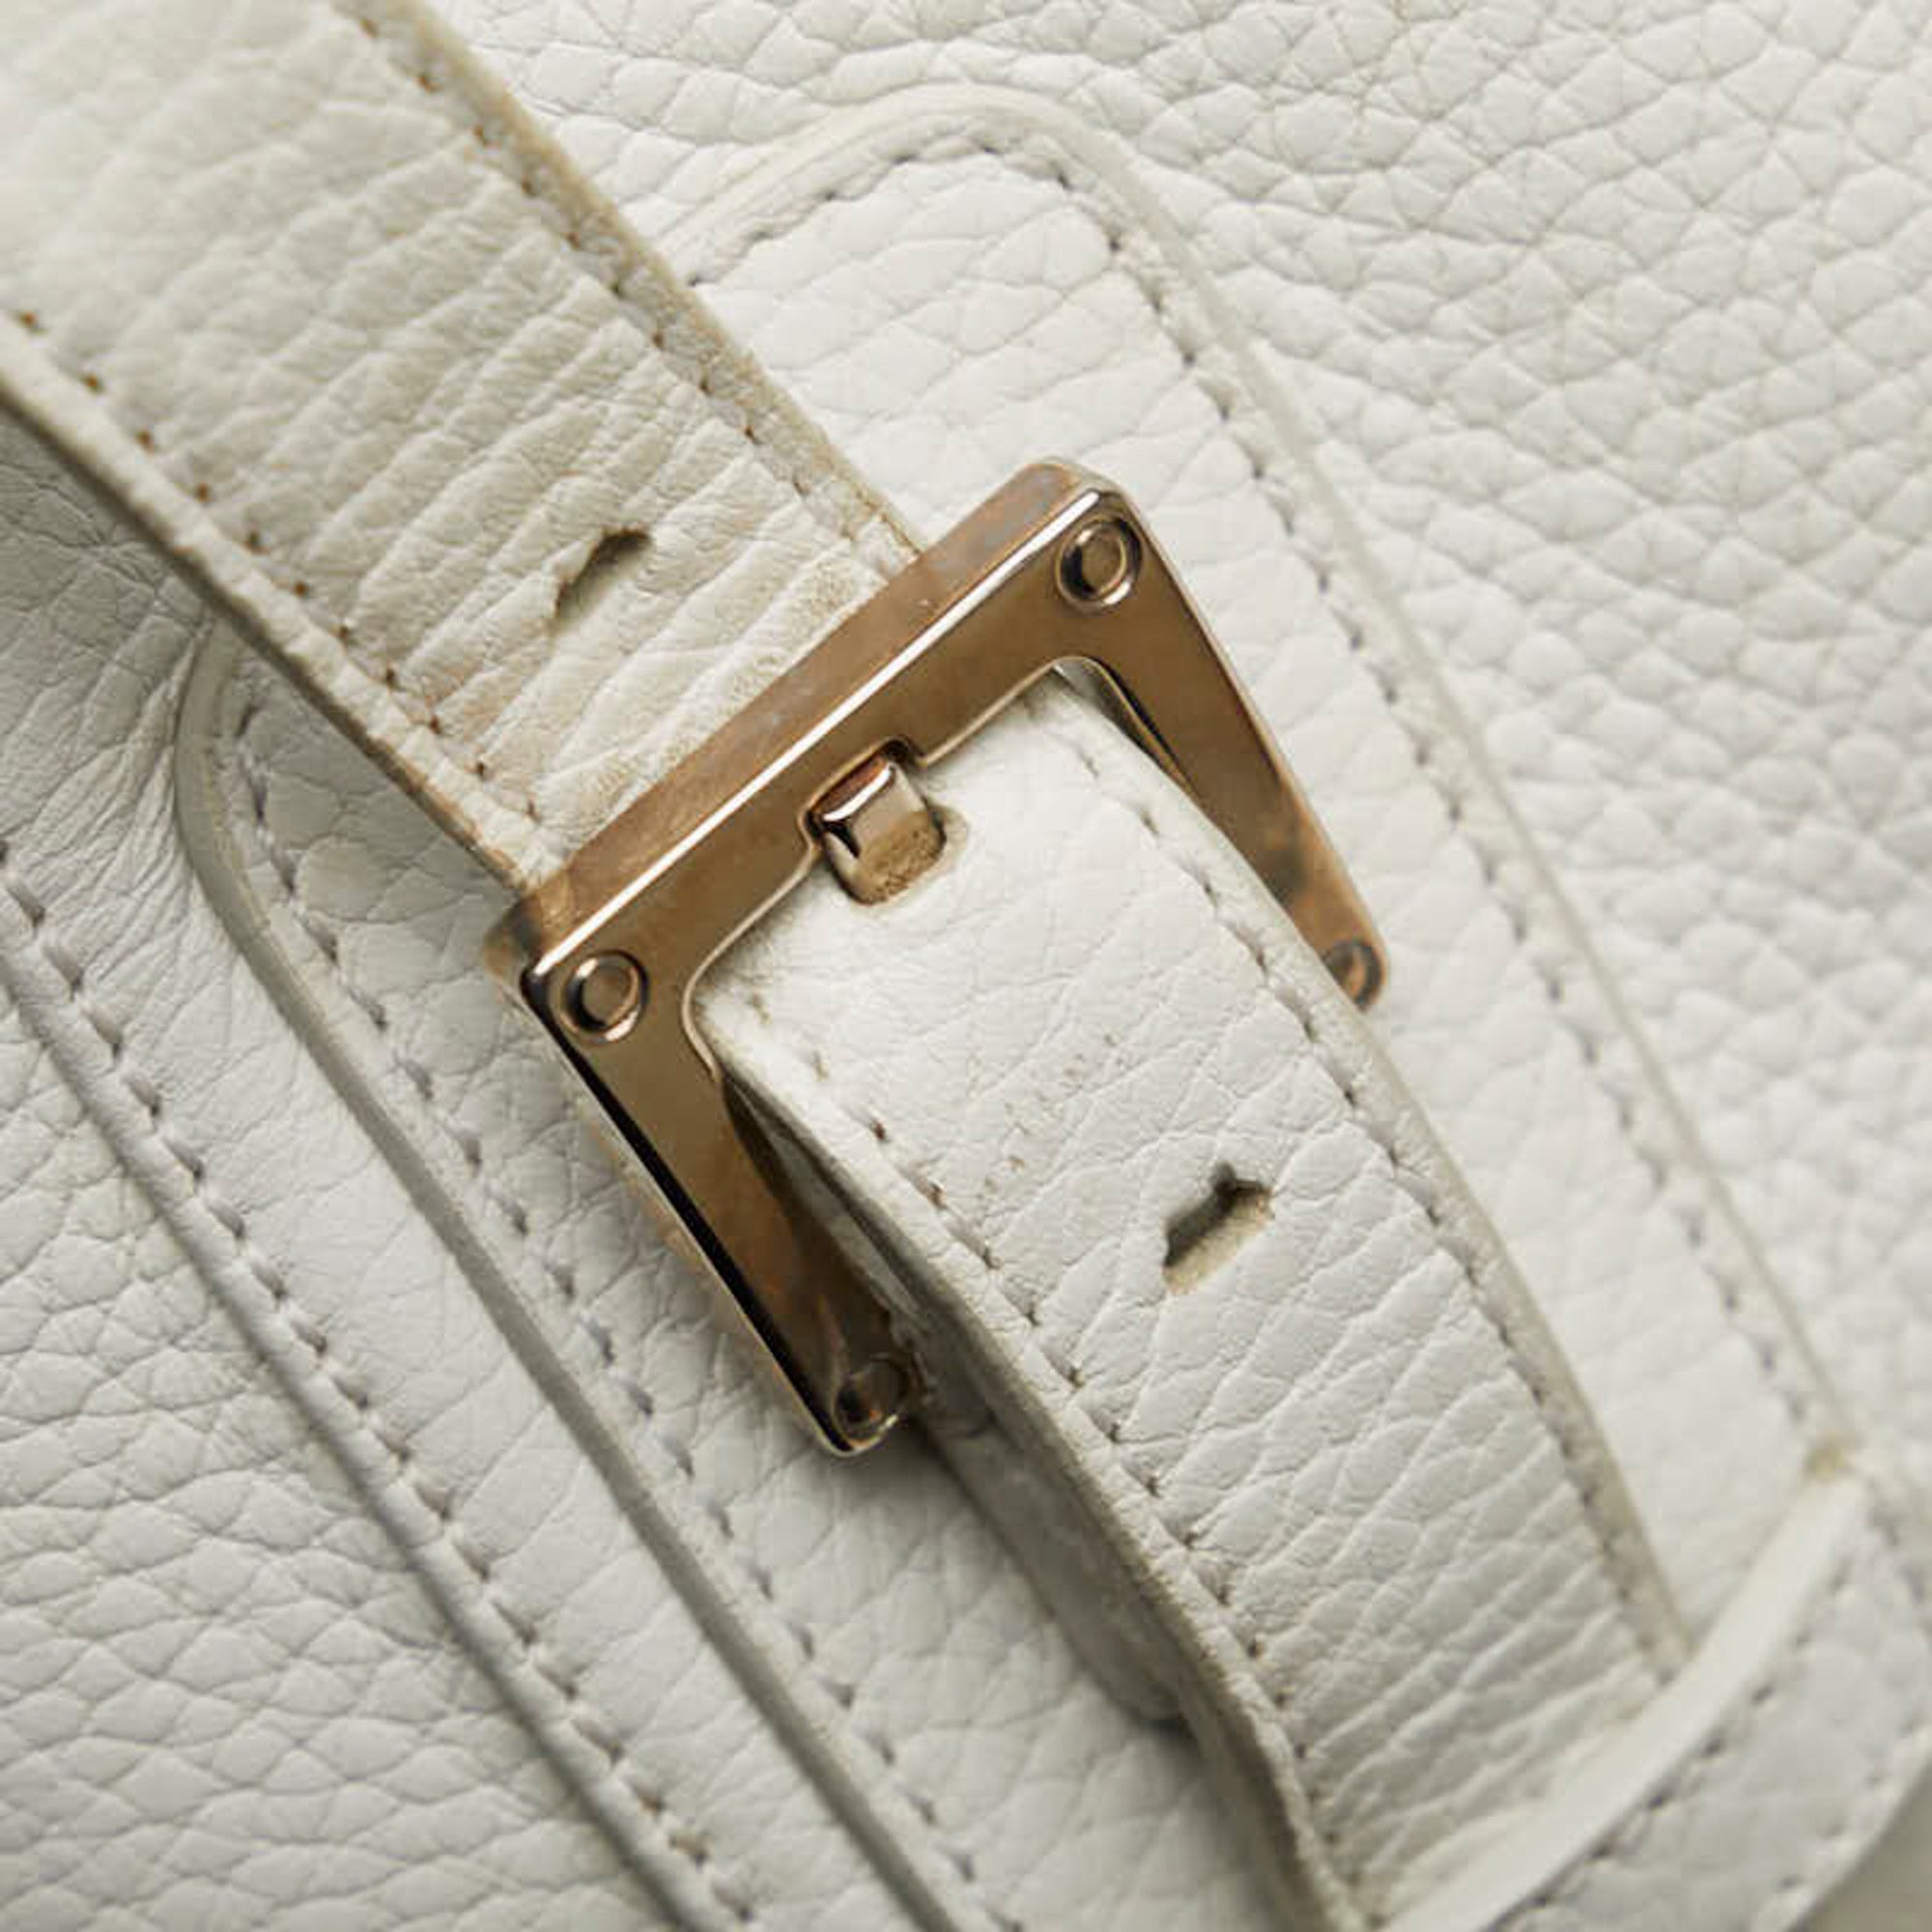 LOEWE Senda Handbag White Leather Ladies